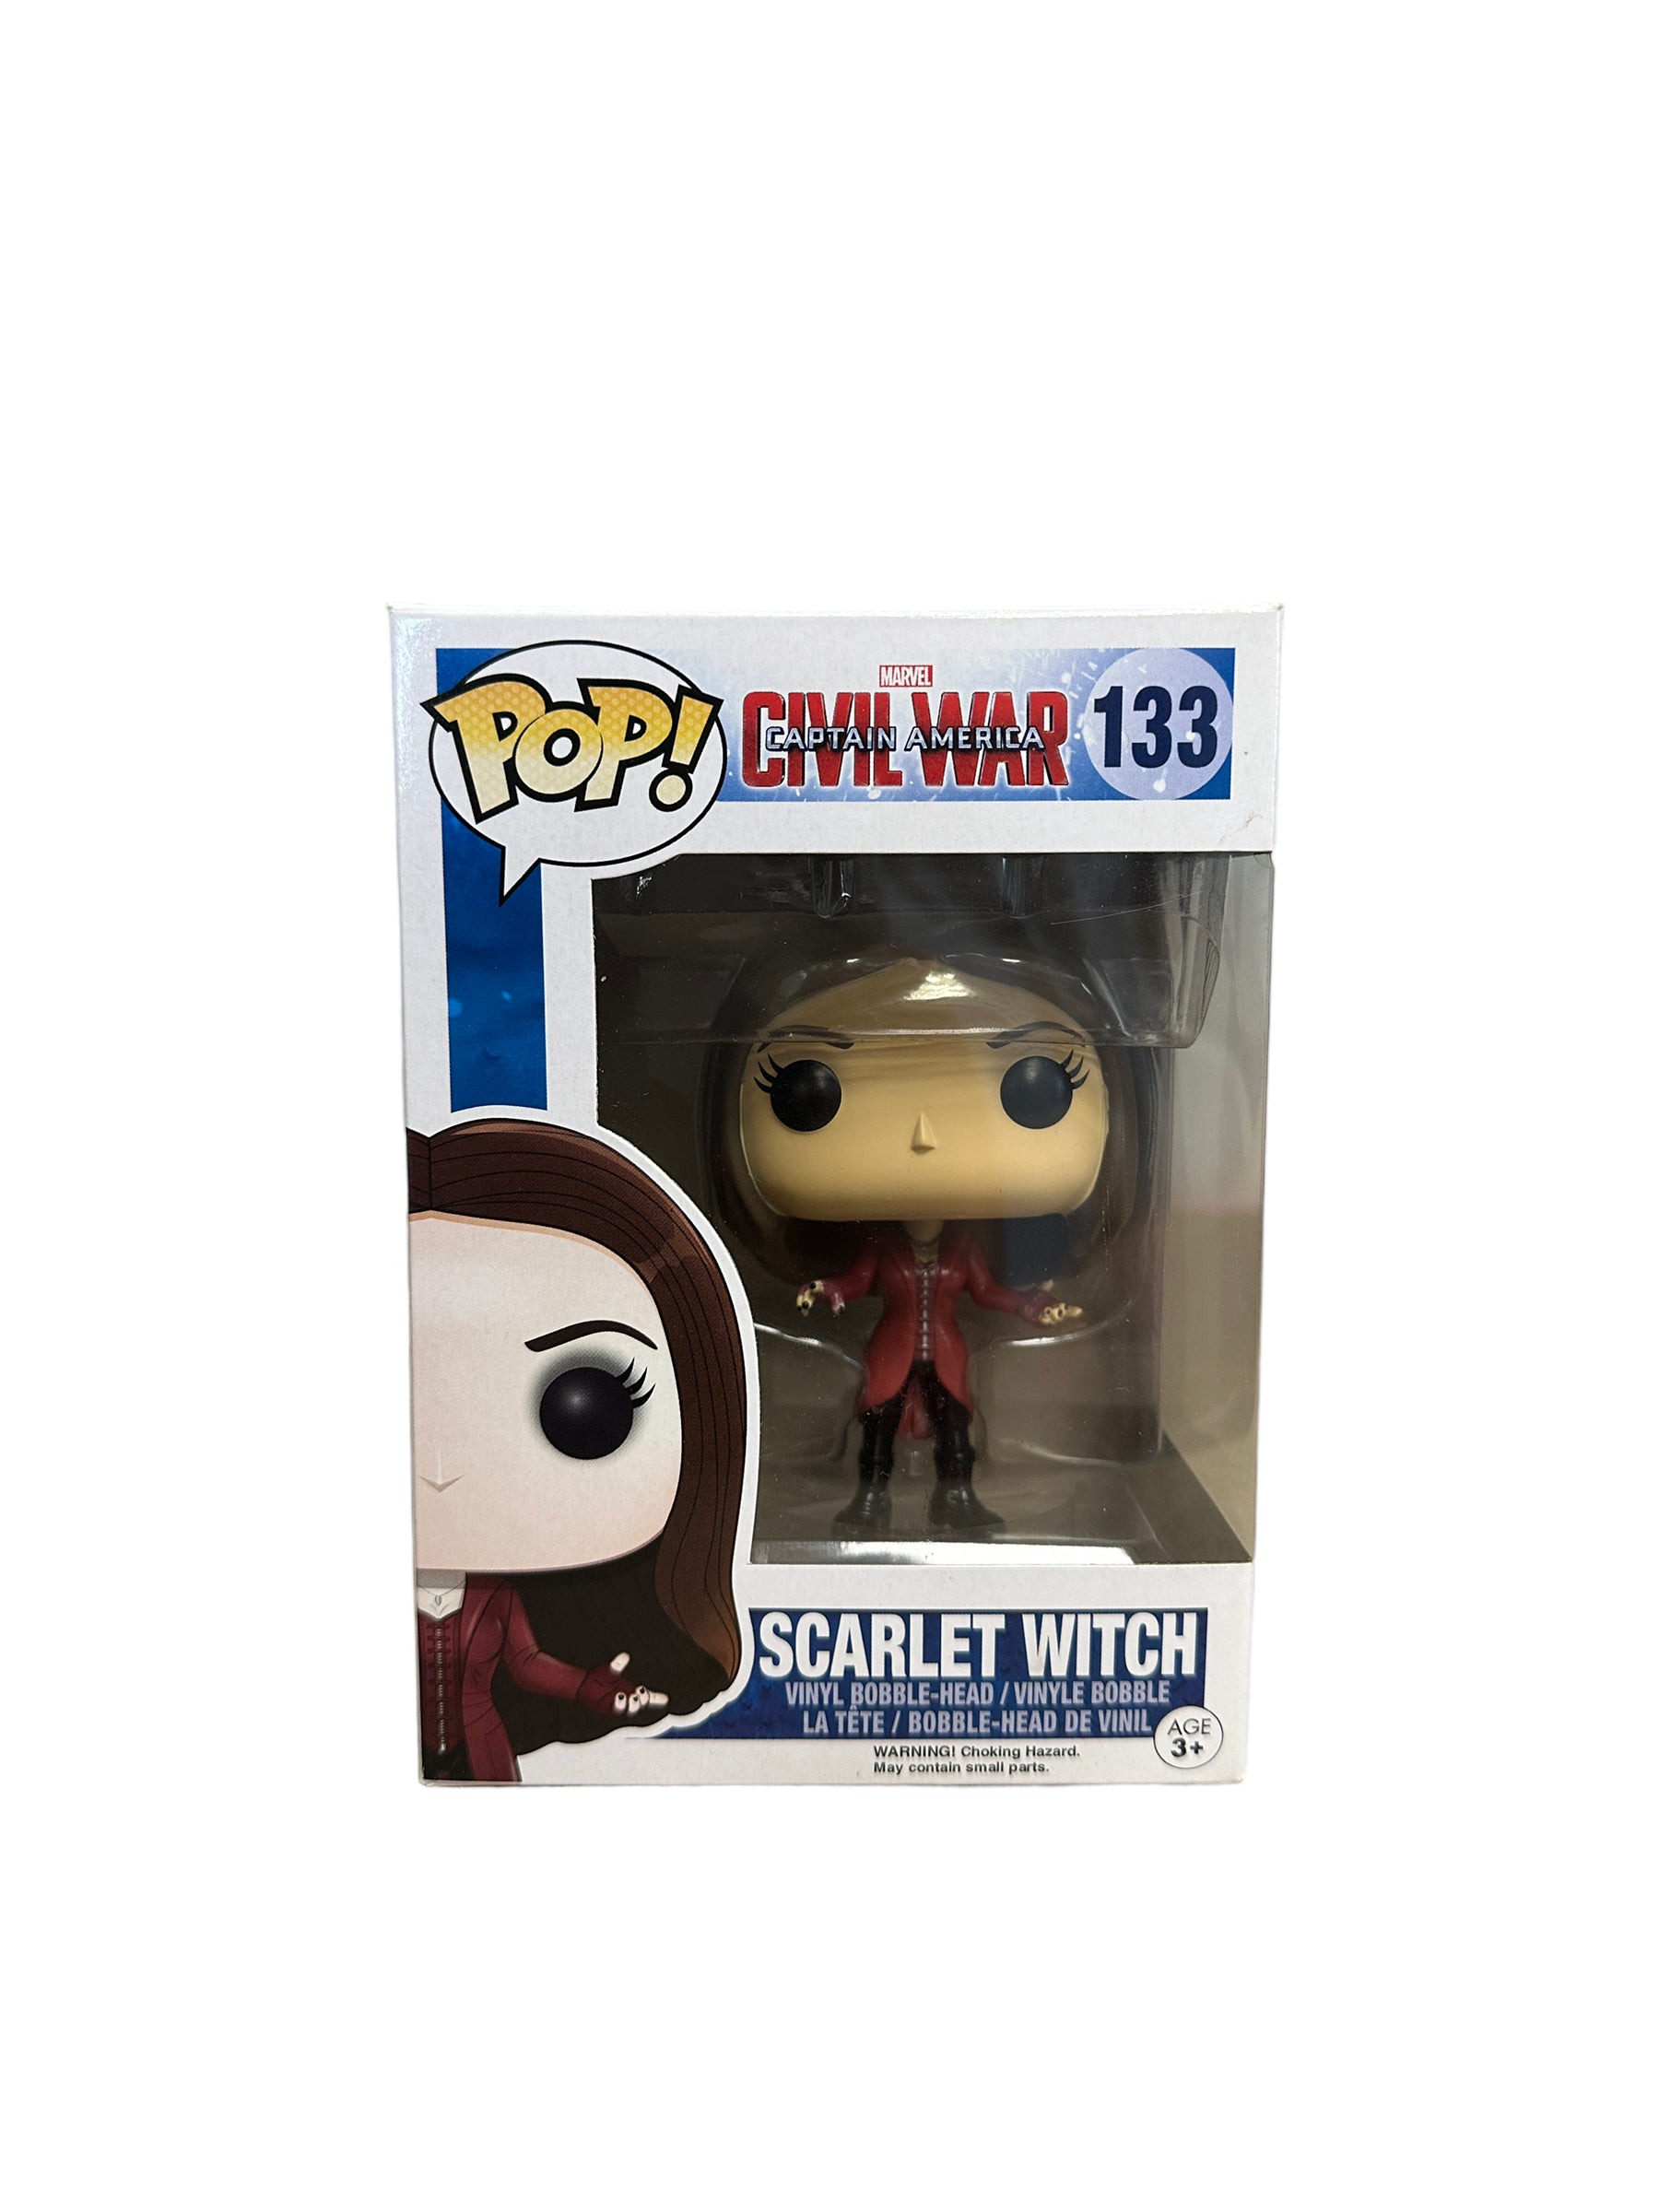 Scarlet Witch #133 Funko Pop! - Captain America Civil War - 2015 Pop! - Condition 8.75/10